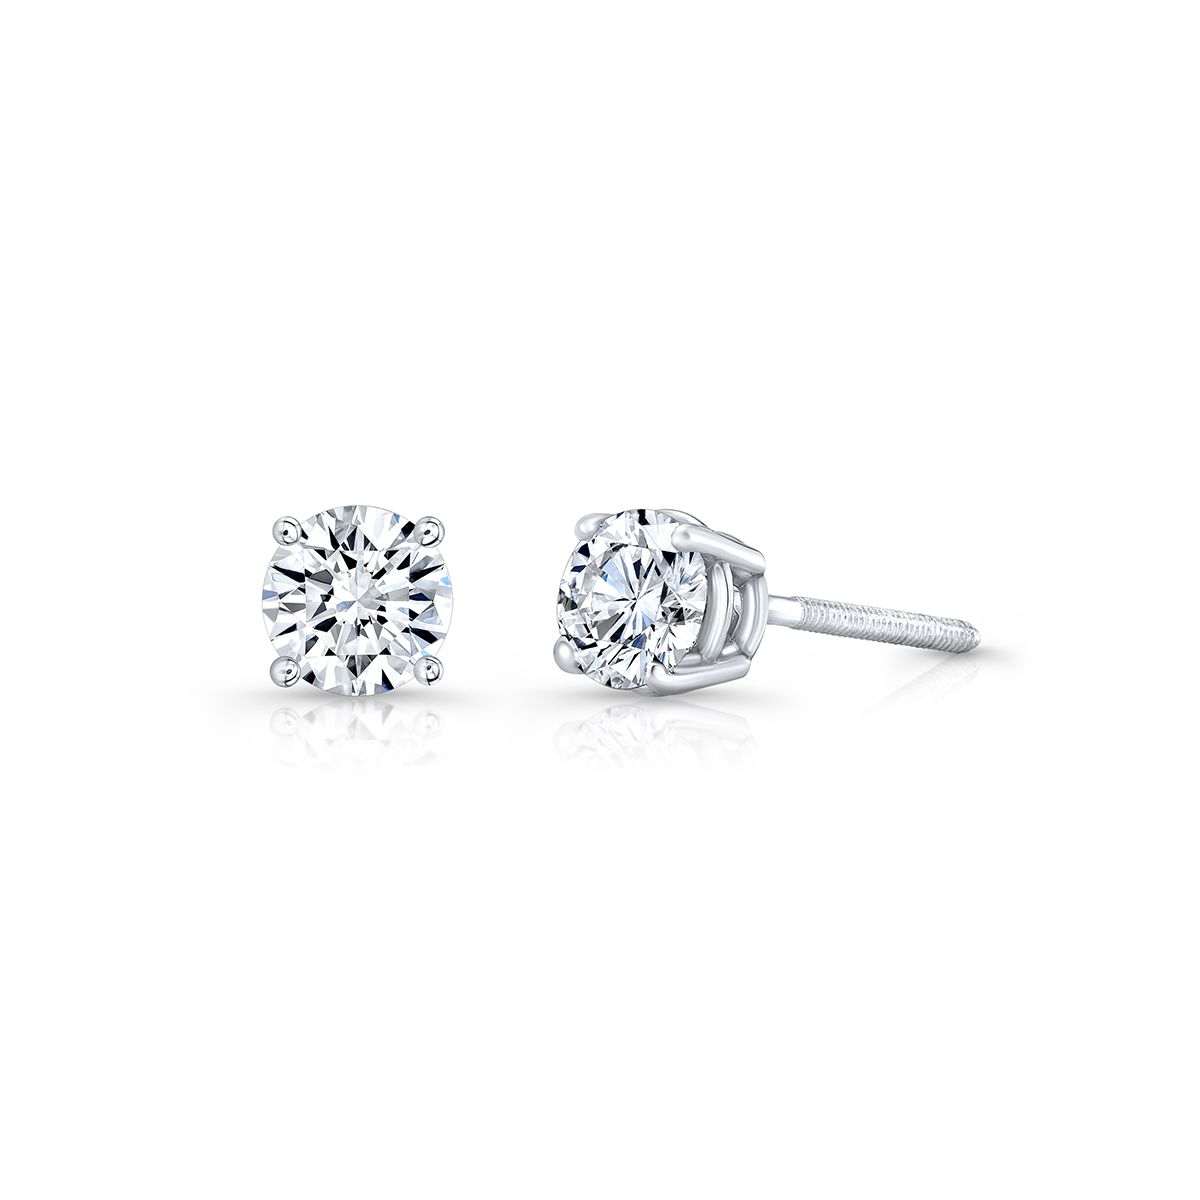 0.60 Carat Round Cut Diamond Stud Earrings - 4 Prong Screw Backing  GIA Certified